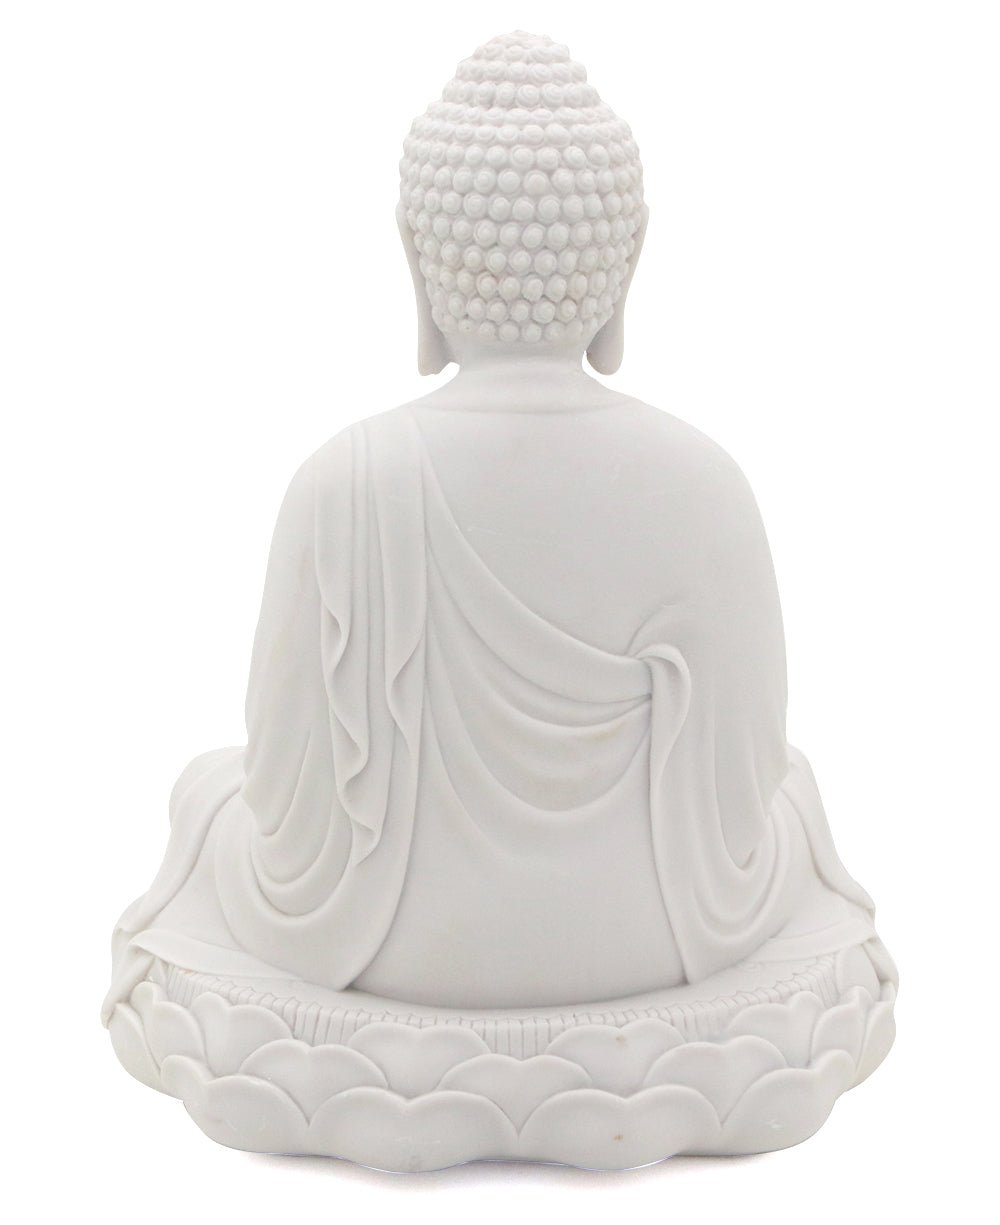 Serene White Garden Meditating Buddha statue - Sculptures & Statues